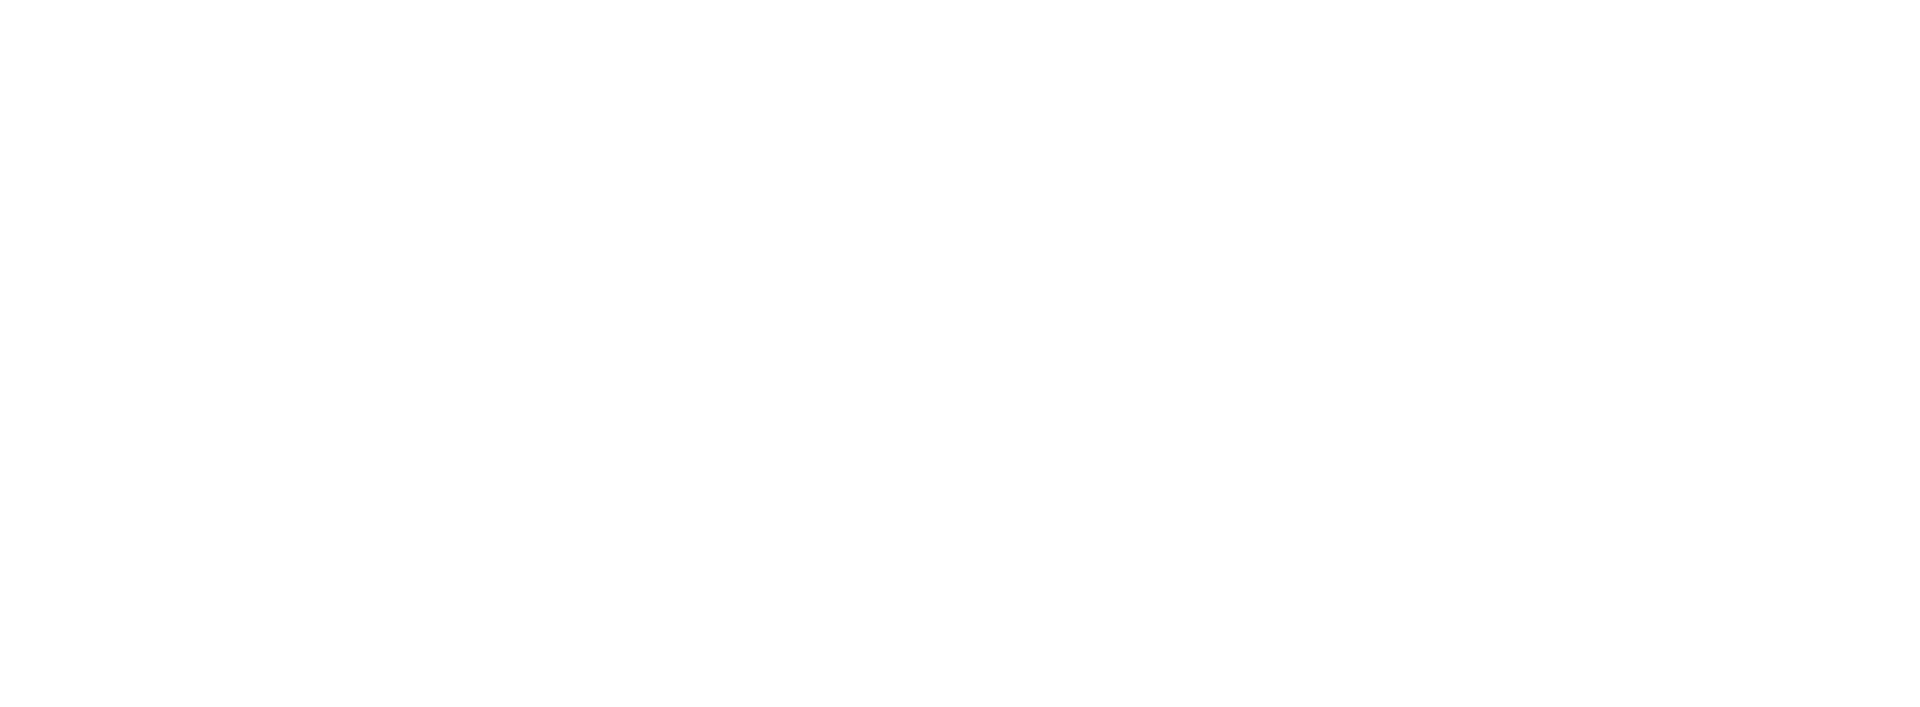 Leeds Sixth Form College Logo